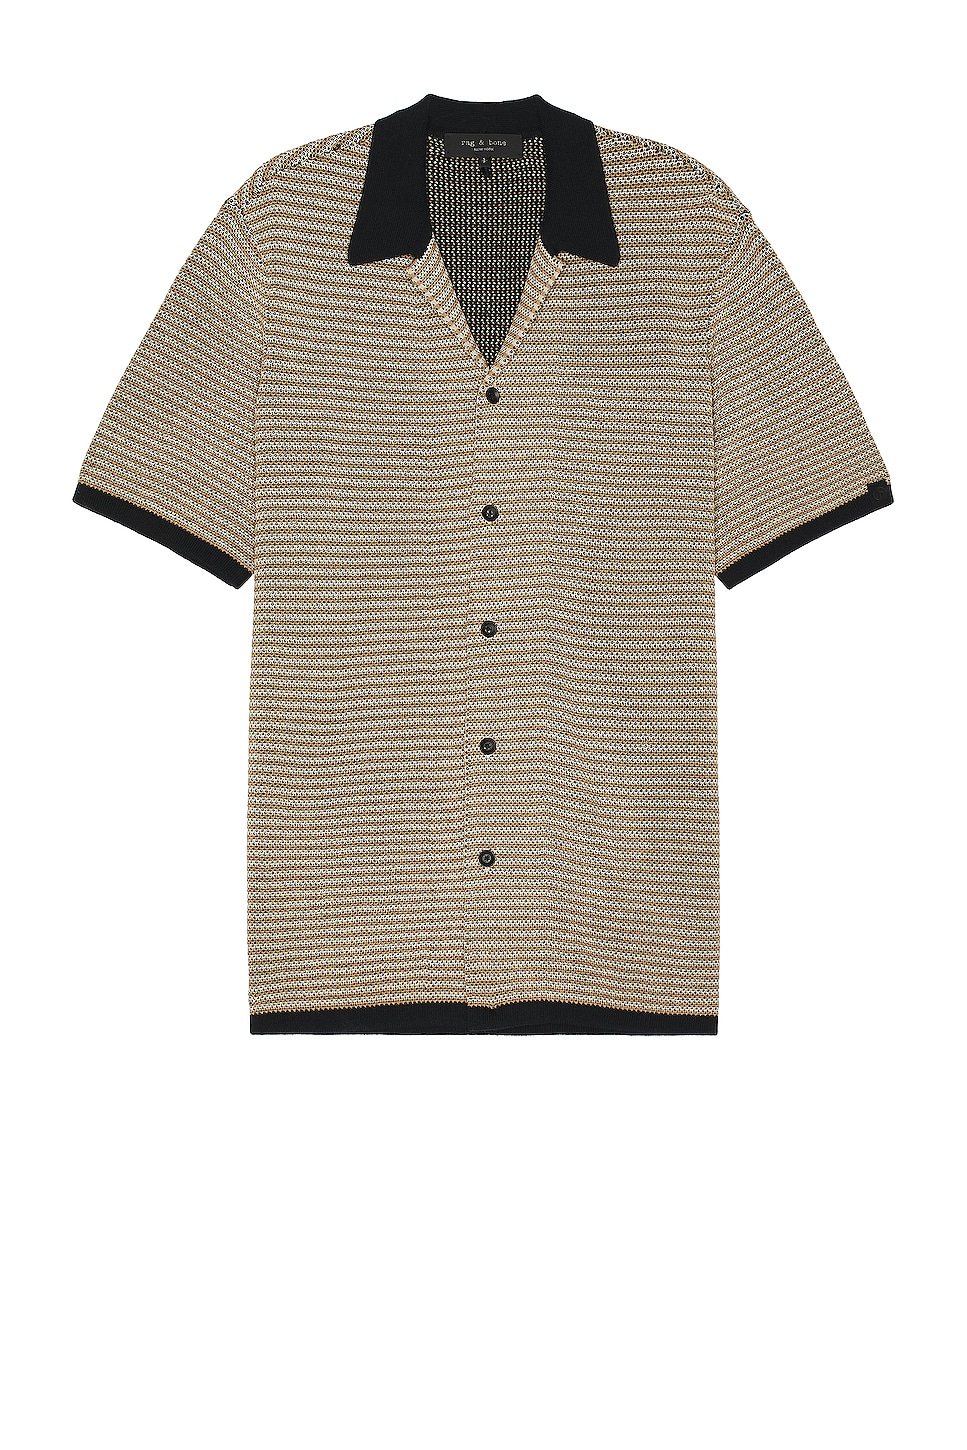 Image 1 of Rag & Bone Felix Button Down Shirt in Black & Multi